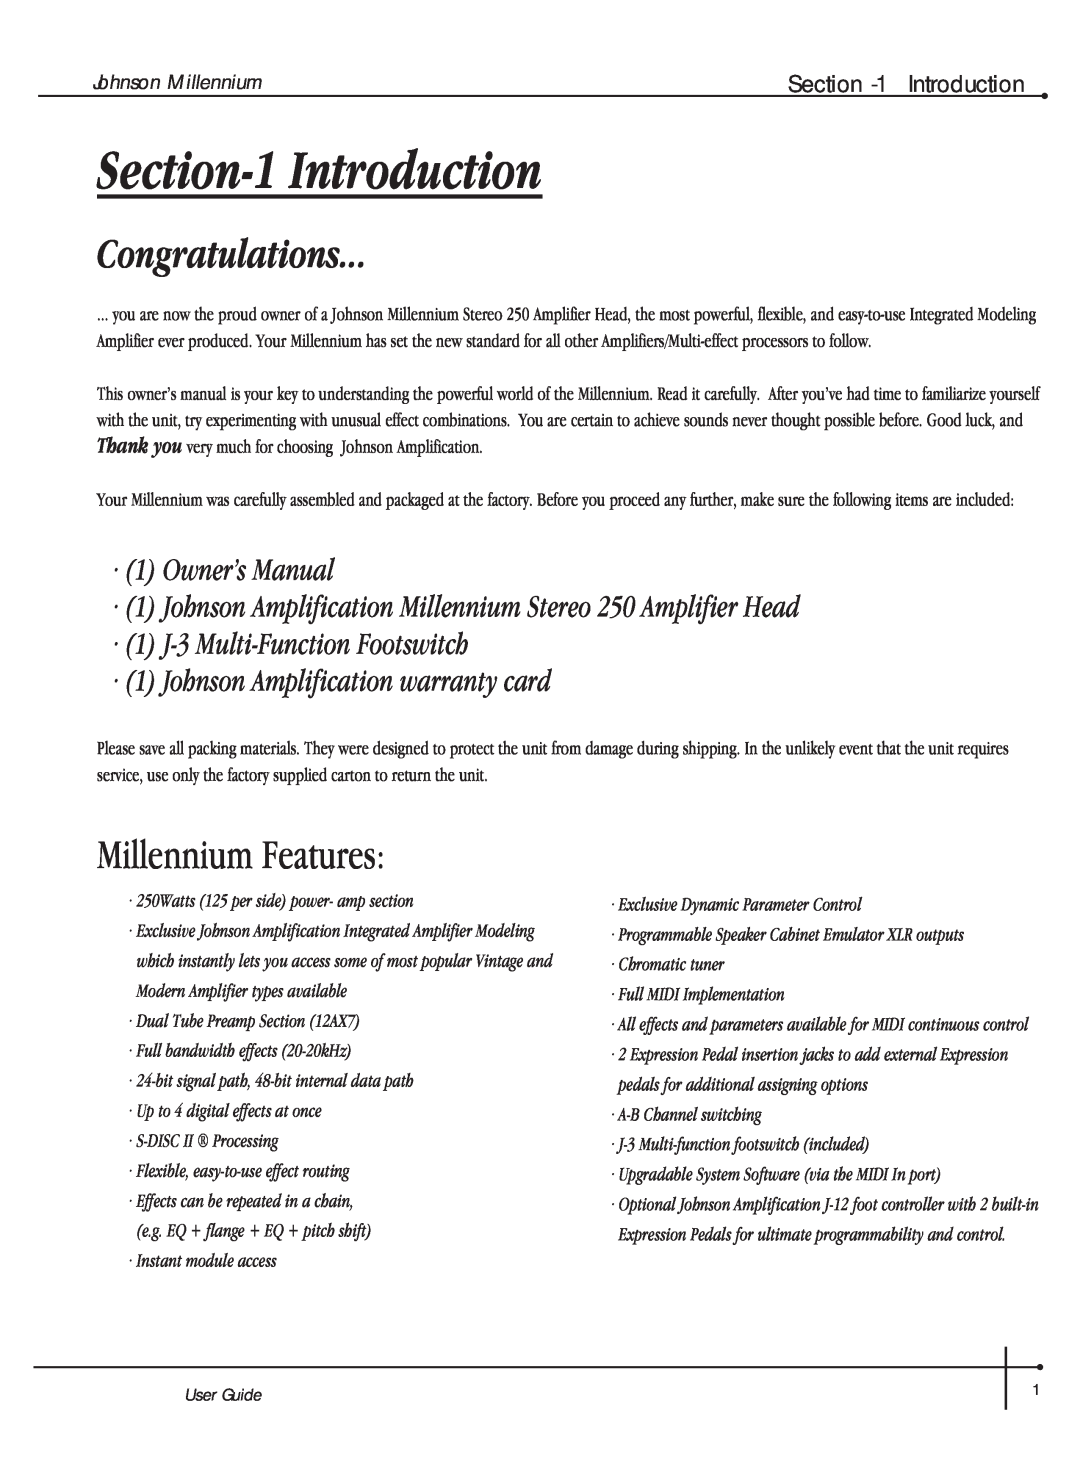 Millennium Enterprises Integrated Modeling Amplifier manual Introduction, Congratulations, Millennium Features, User Guide 